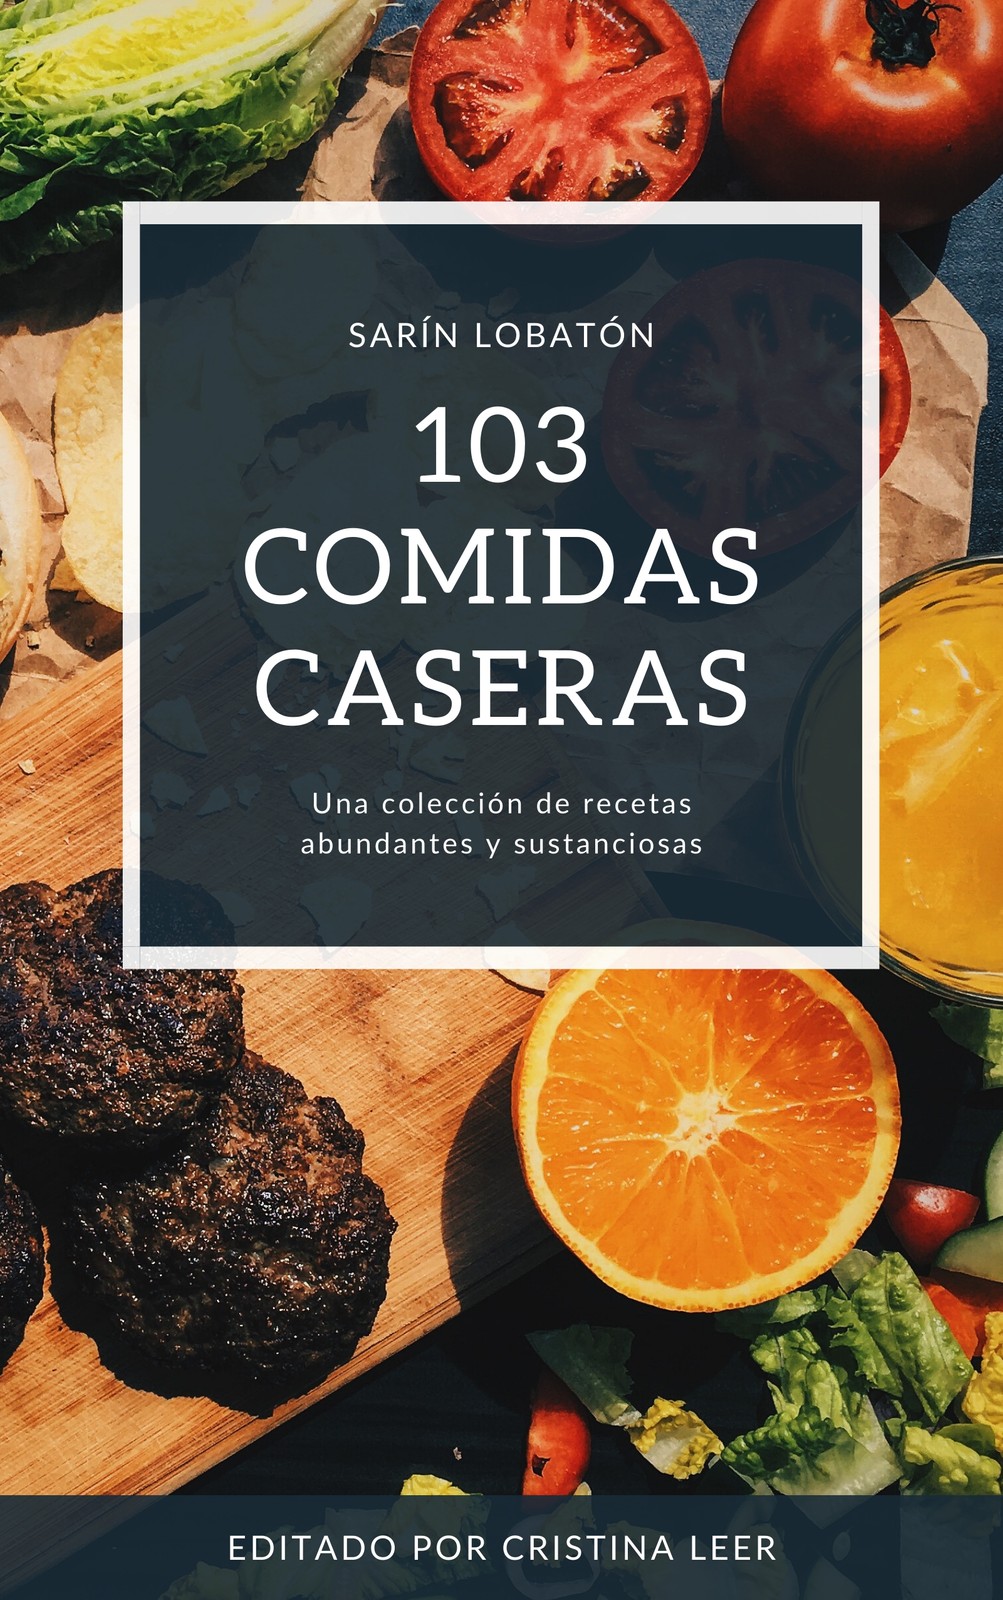 https://marketplace.canva.com/EADzX714S1s/1/0/1003w/canva-azul-marino-cuadrado-foto-libro-cocina-portada-6RsL6j9A_Vw.jpg